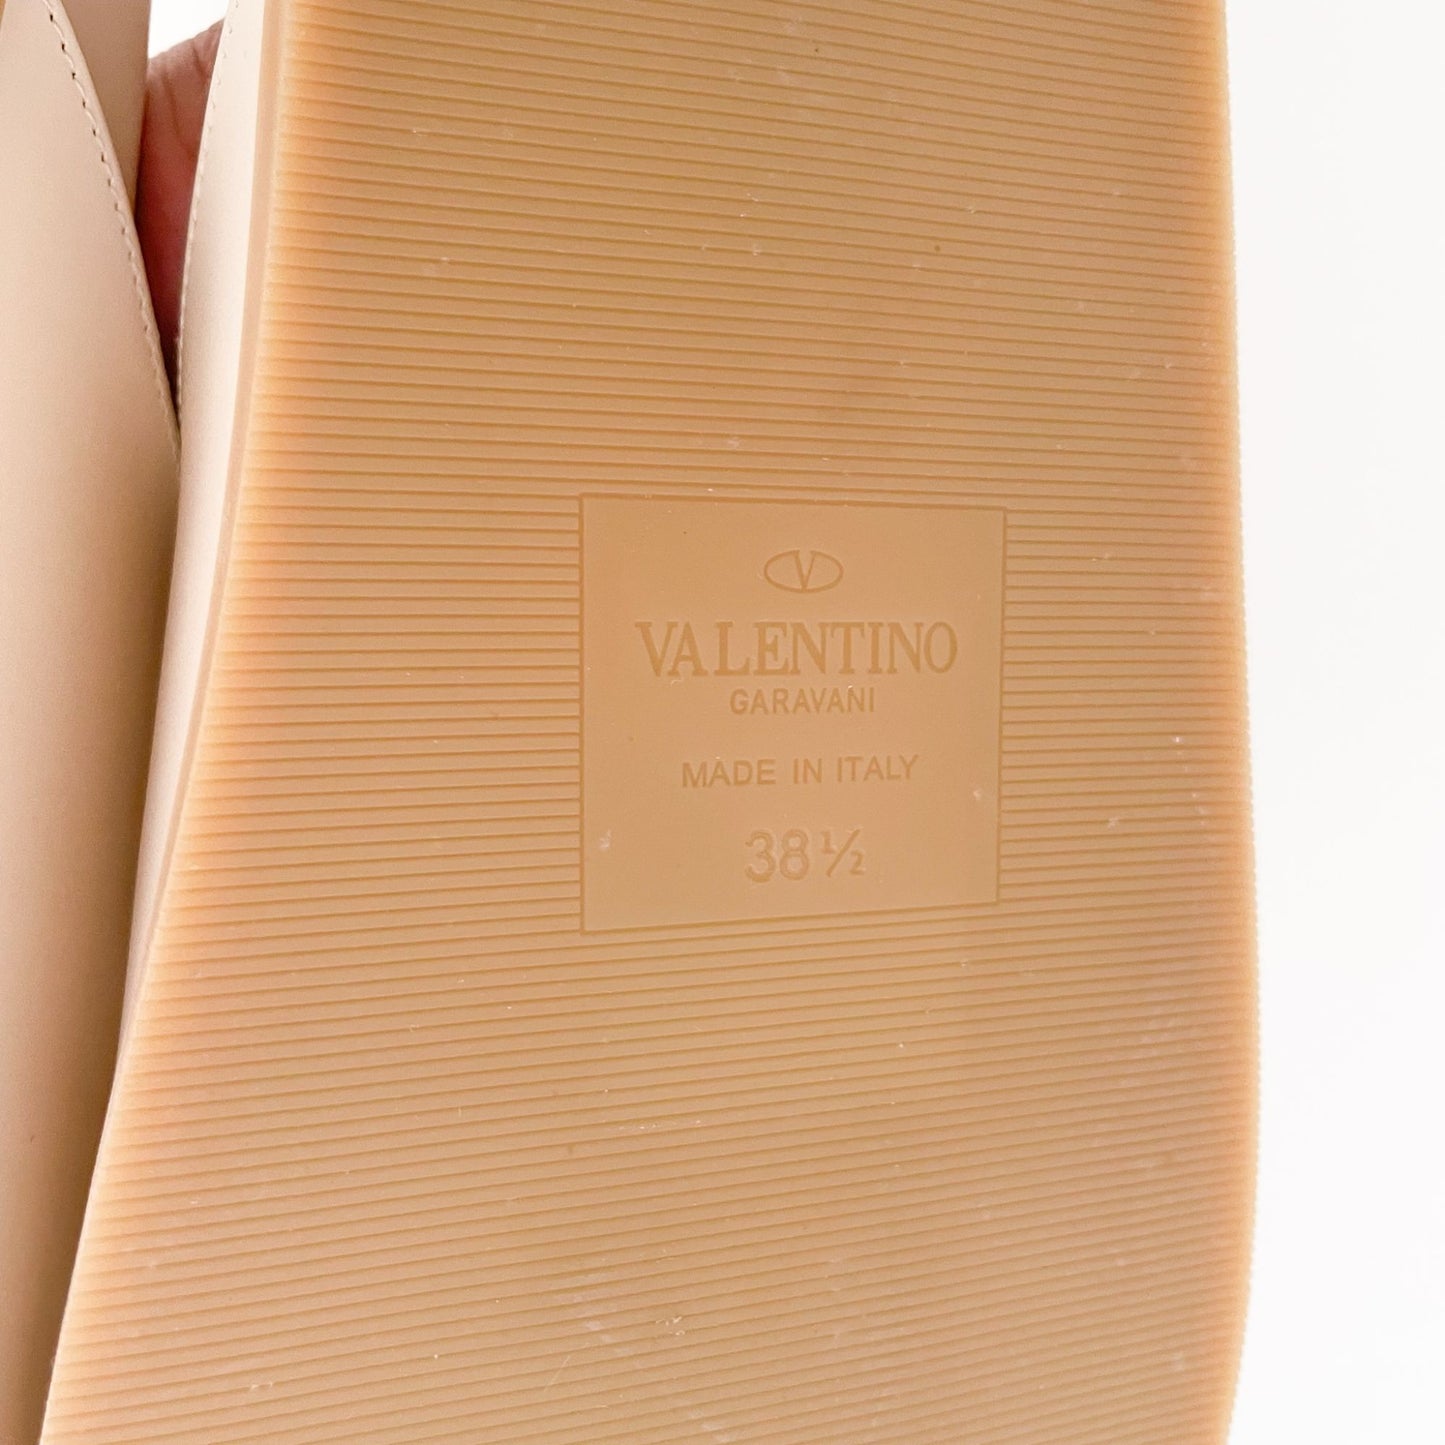 Valentino Garavani One Stud Flat Sandals in Ivory Size 38.5